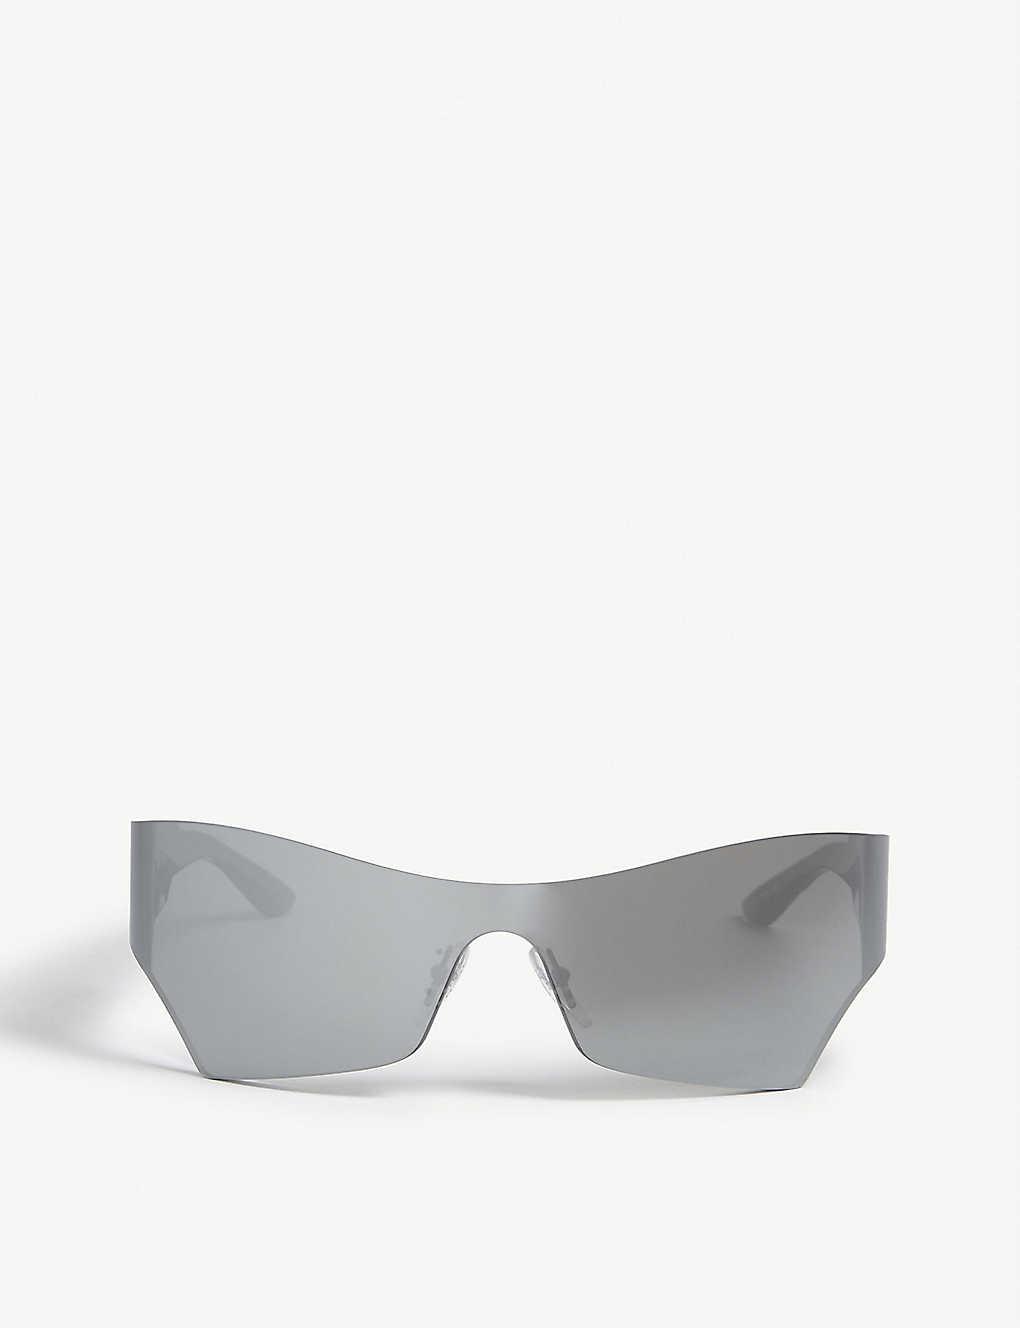 Balenciaga Bb0040s Cat-eye Sunglasses in Silver (Metallic) - Lyst